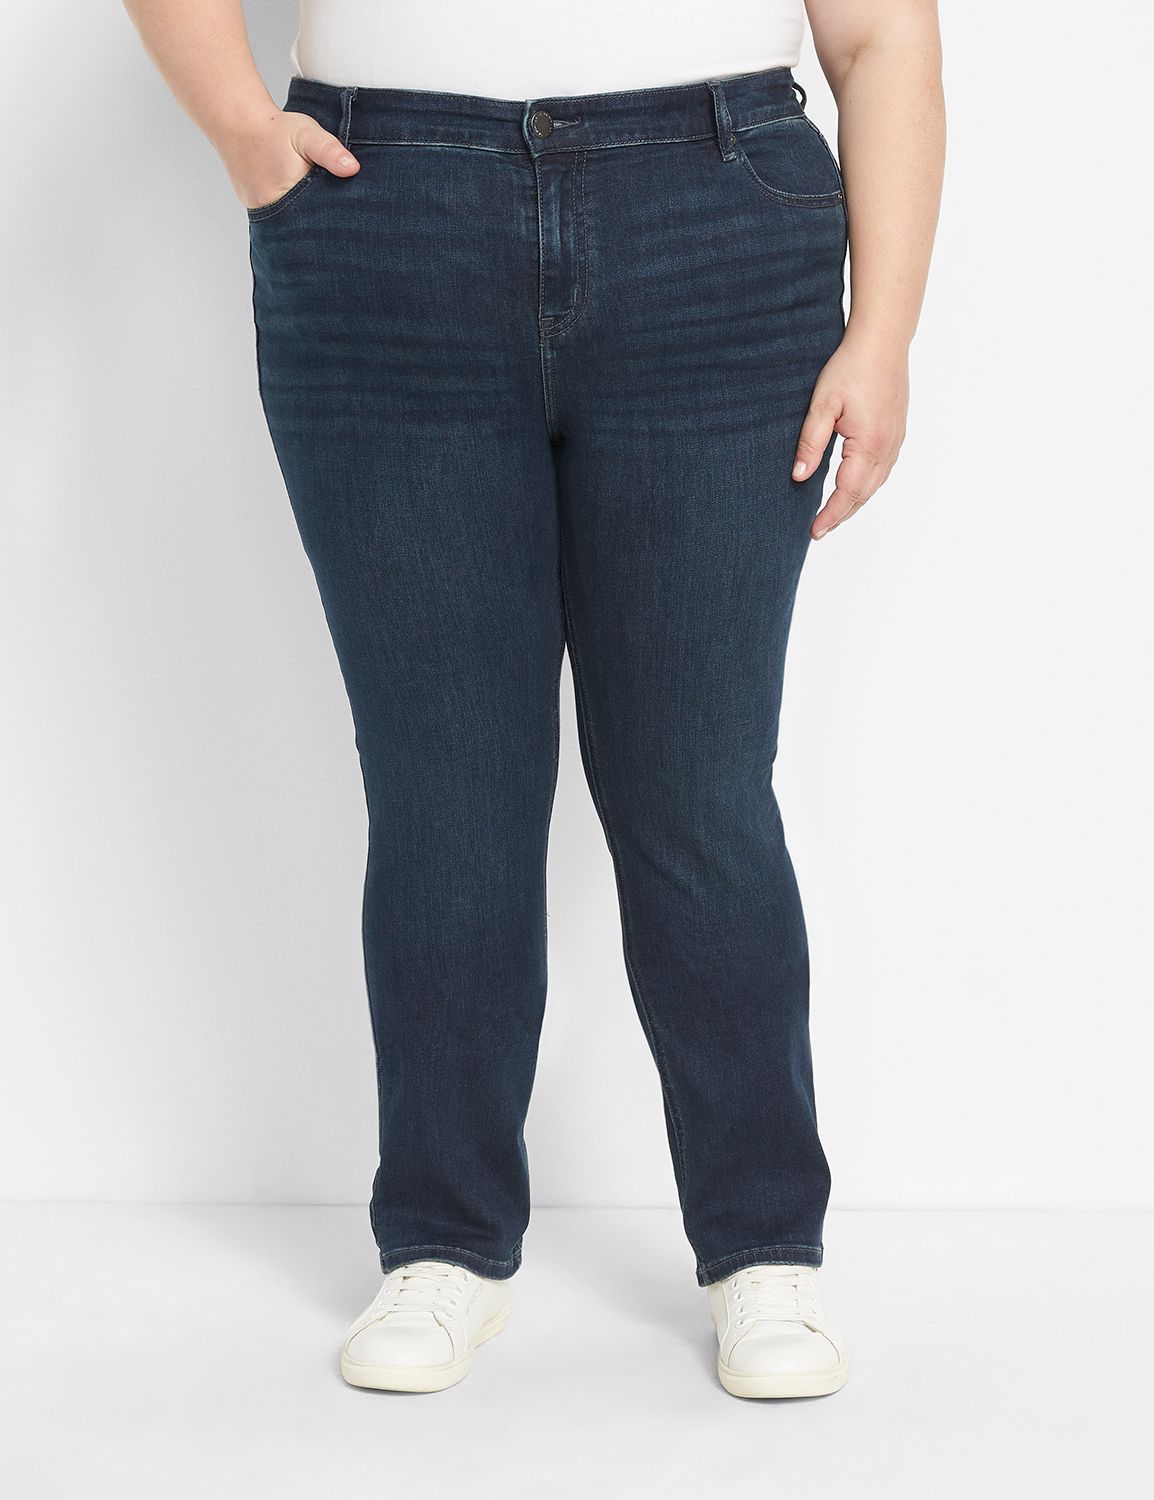 lane bryant tall jeans